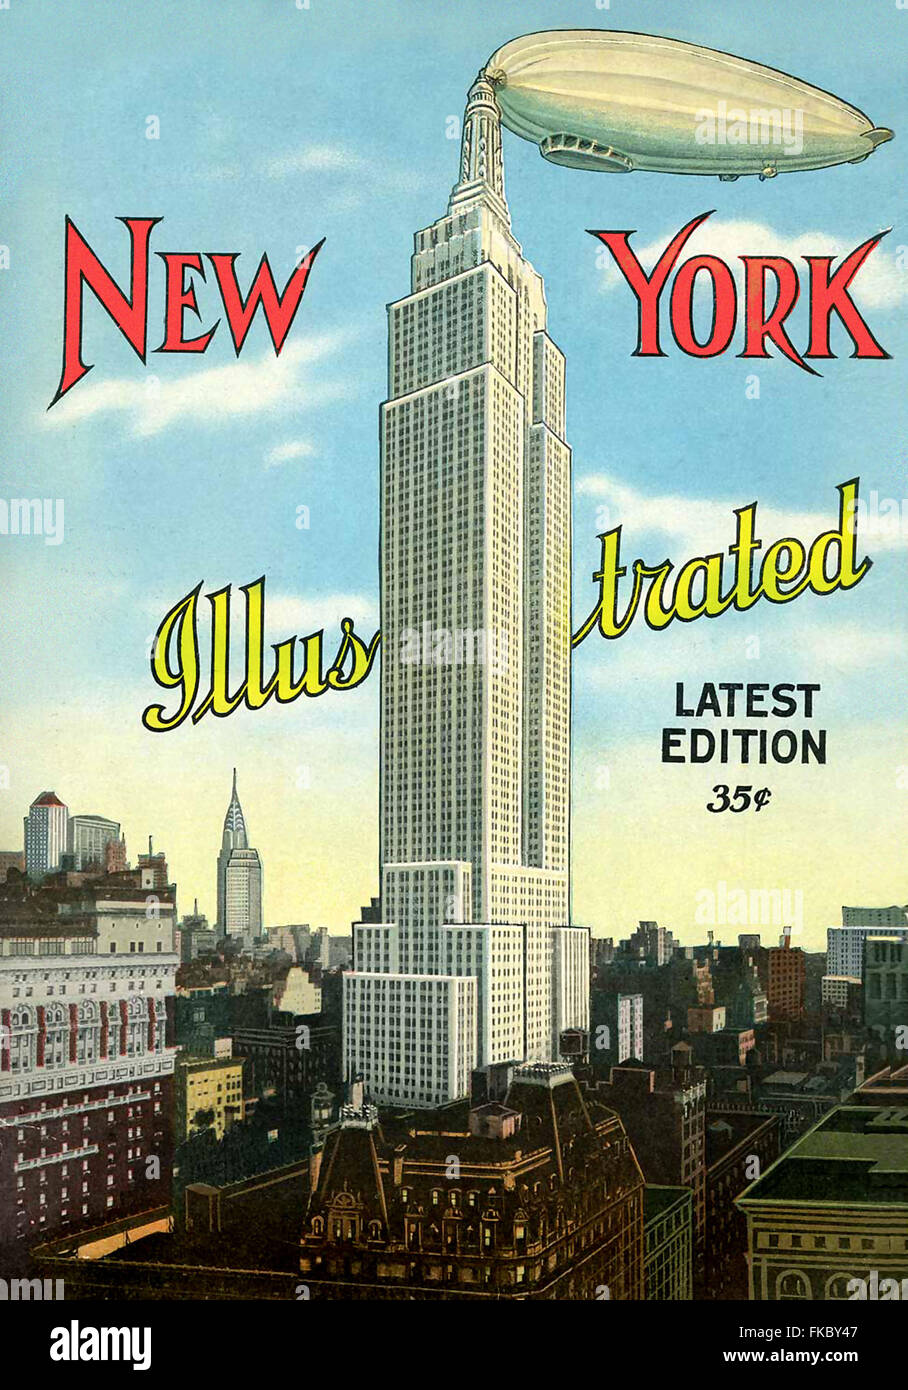 USA New York Illustrated Magazine Cover Stock Photo